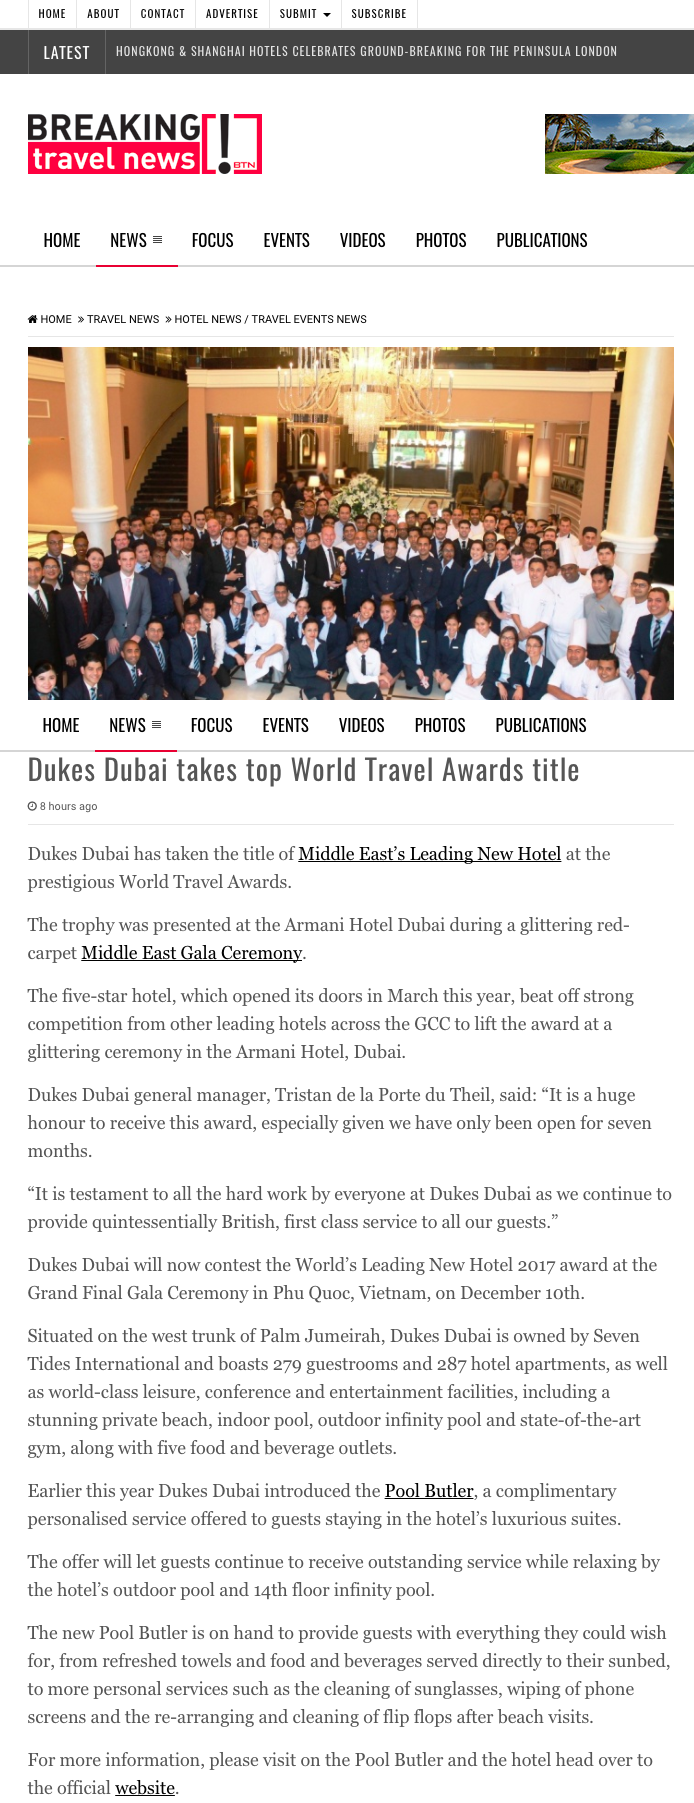 Dukes Dubai takes top World Travel Awards title